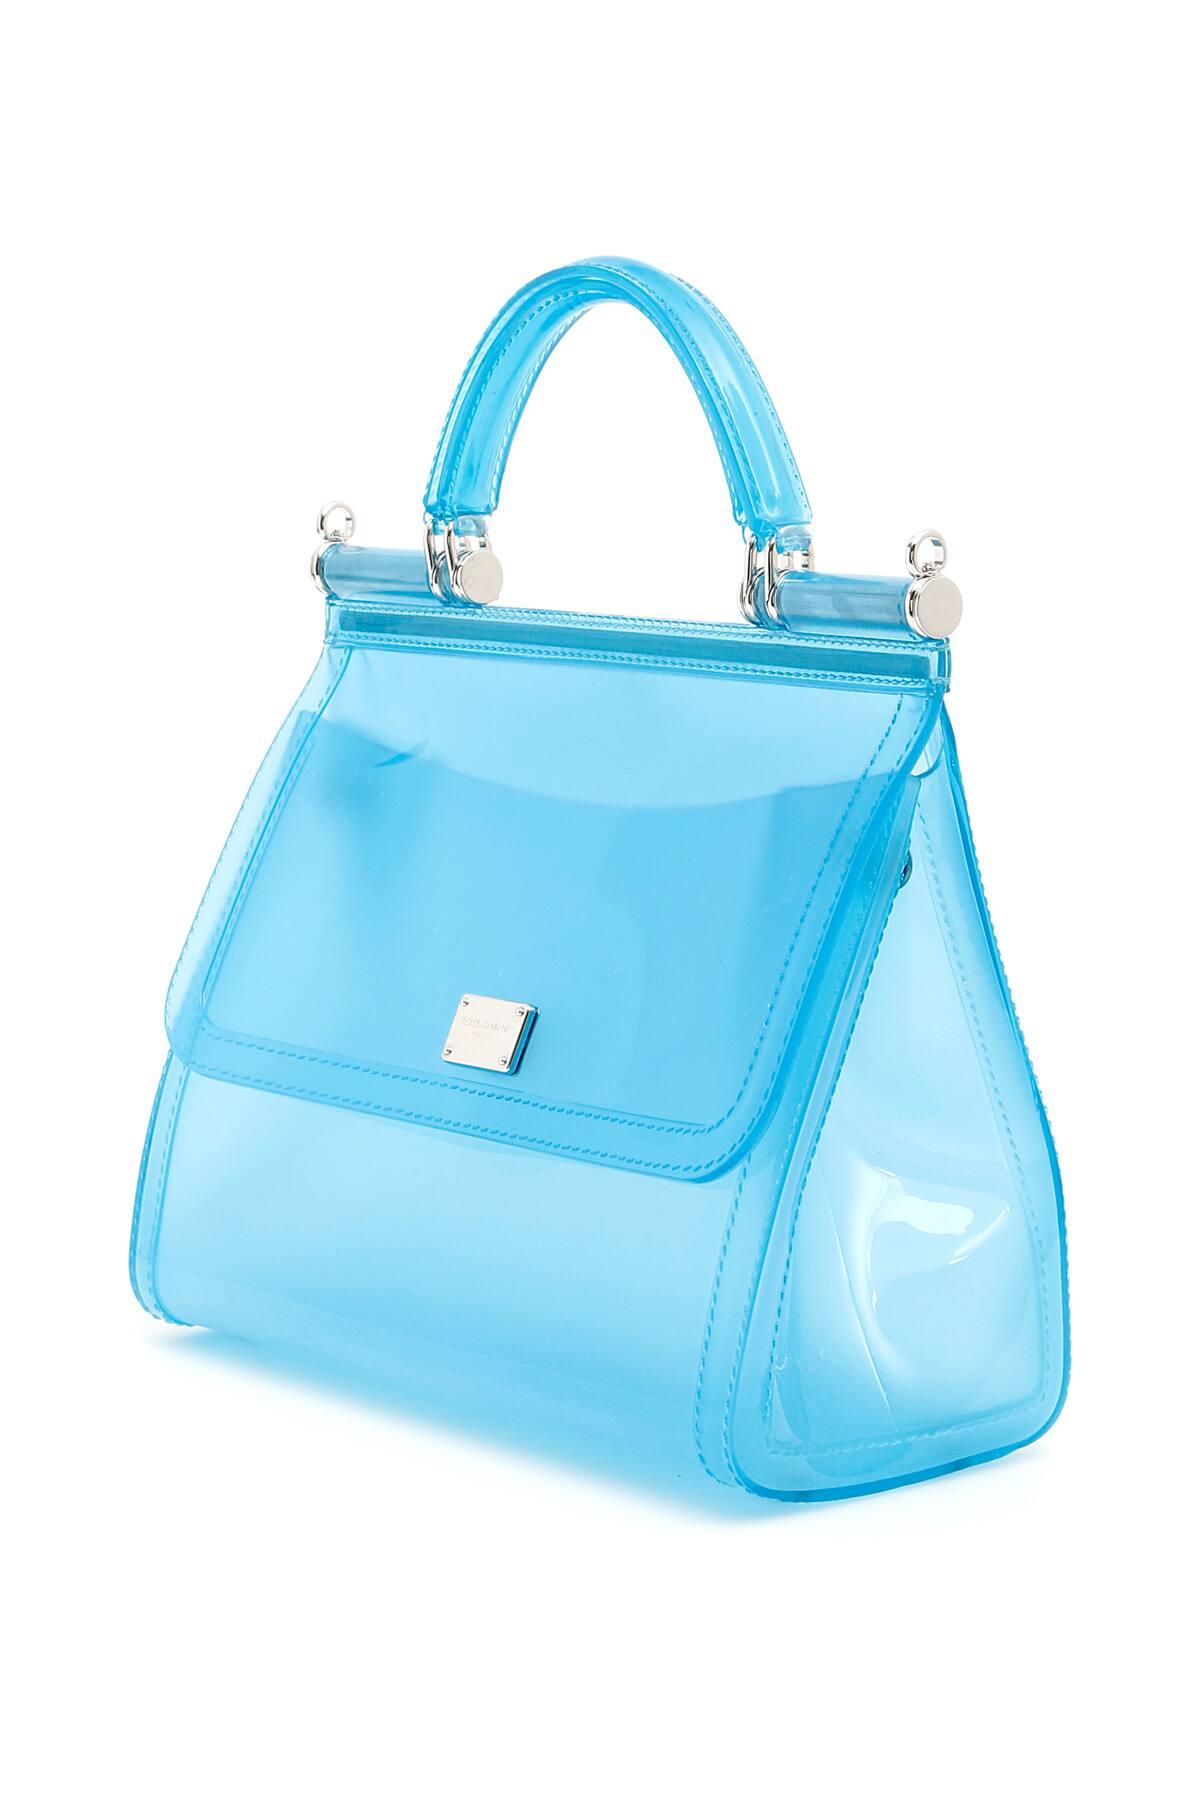 Dolce & Gabbana Pvc Sicily Bag in Blue | Lyst